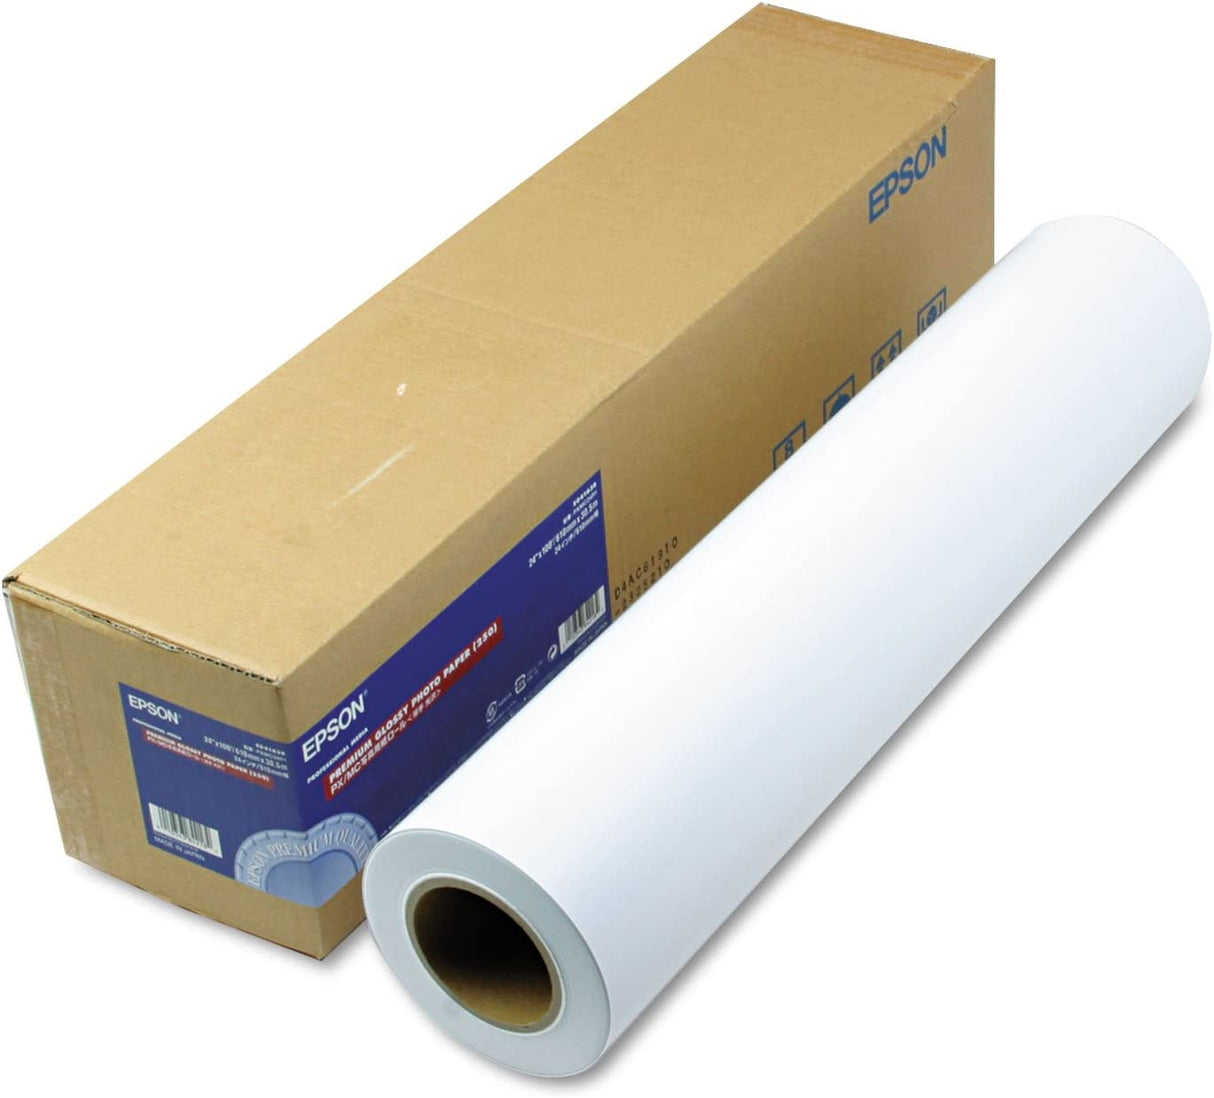 EPSS041638 - Epson Premium Glossy Photo Paper Rolls